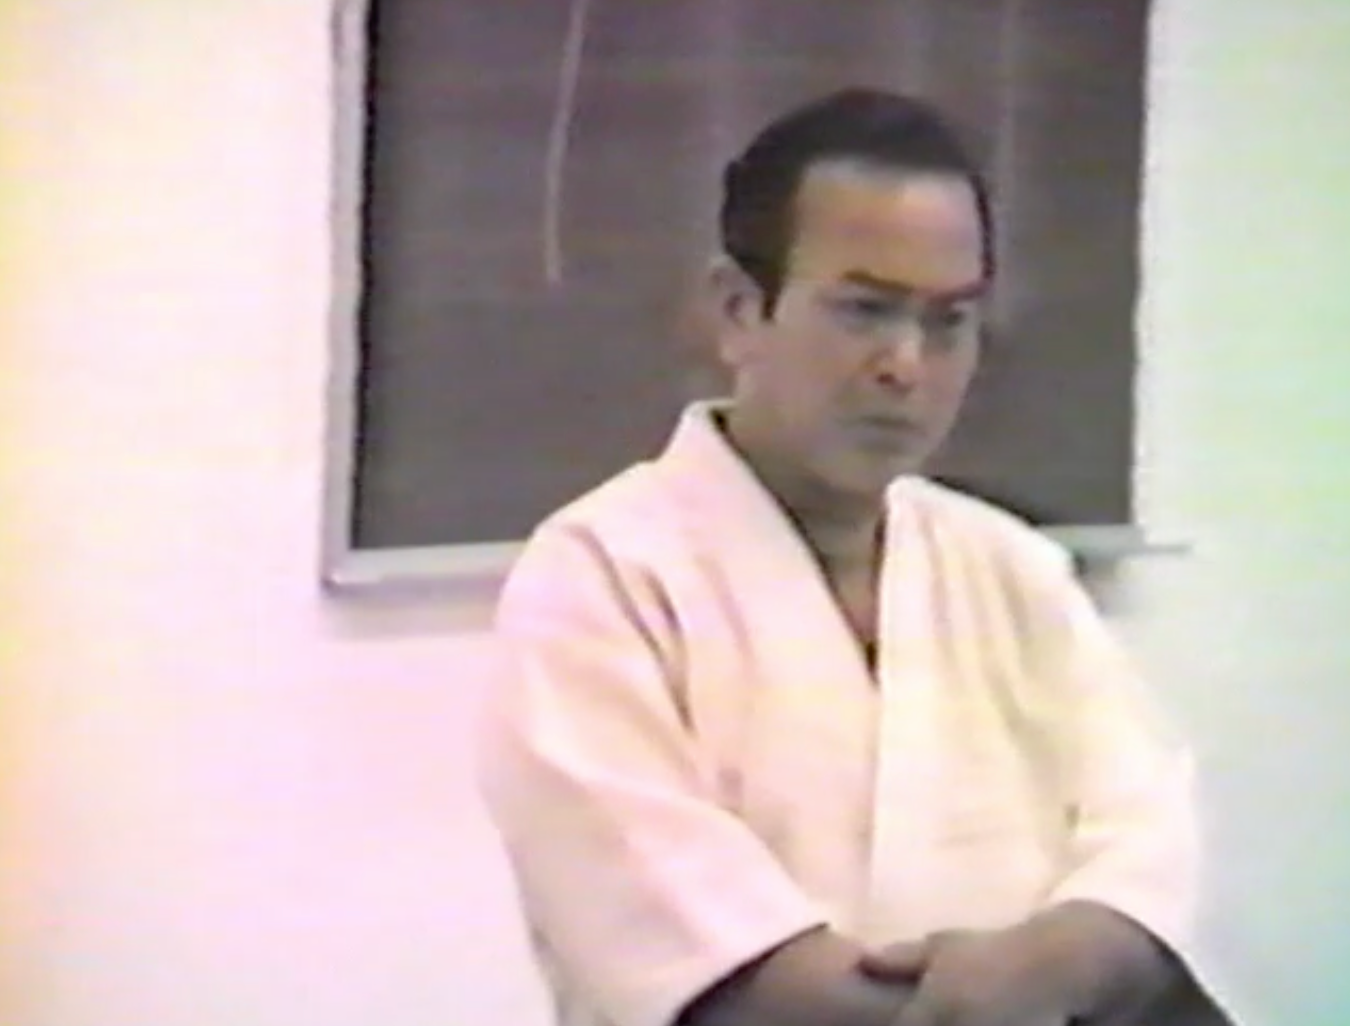 Koichi Tohei en la cinta VHS de EE. UU. (Usada)